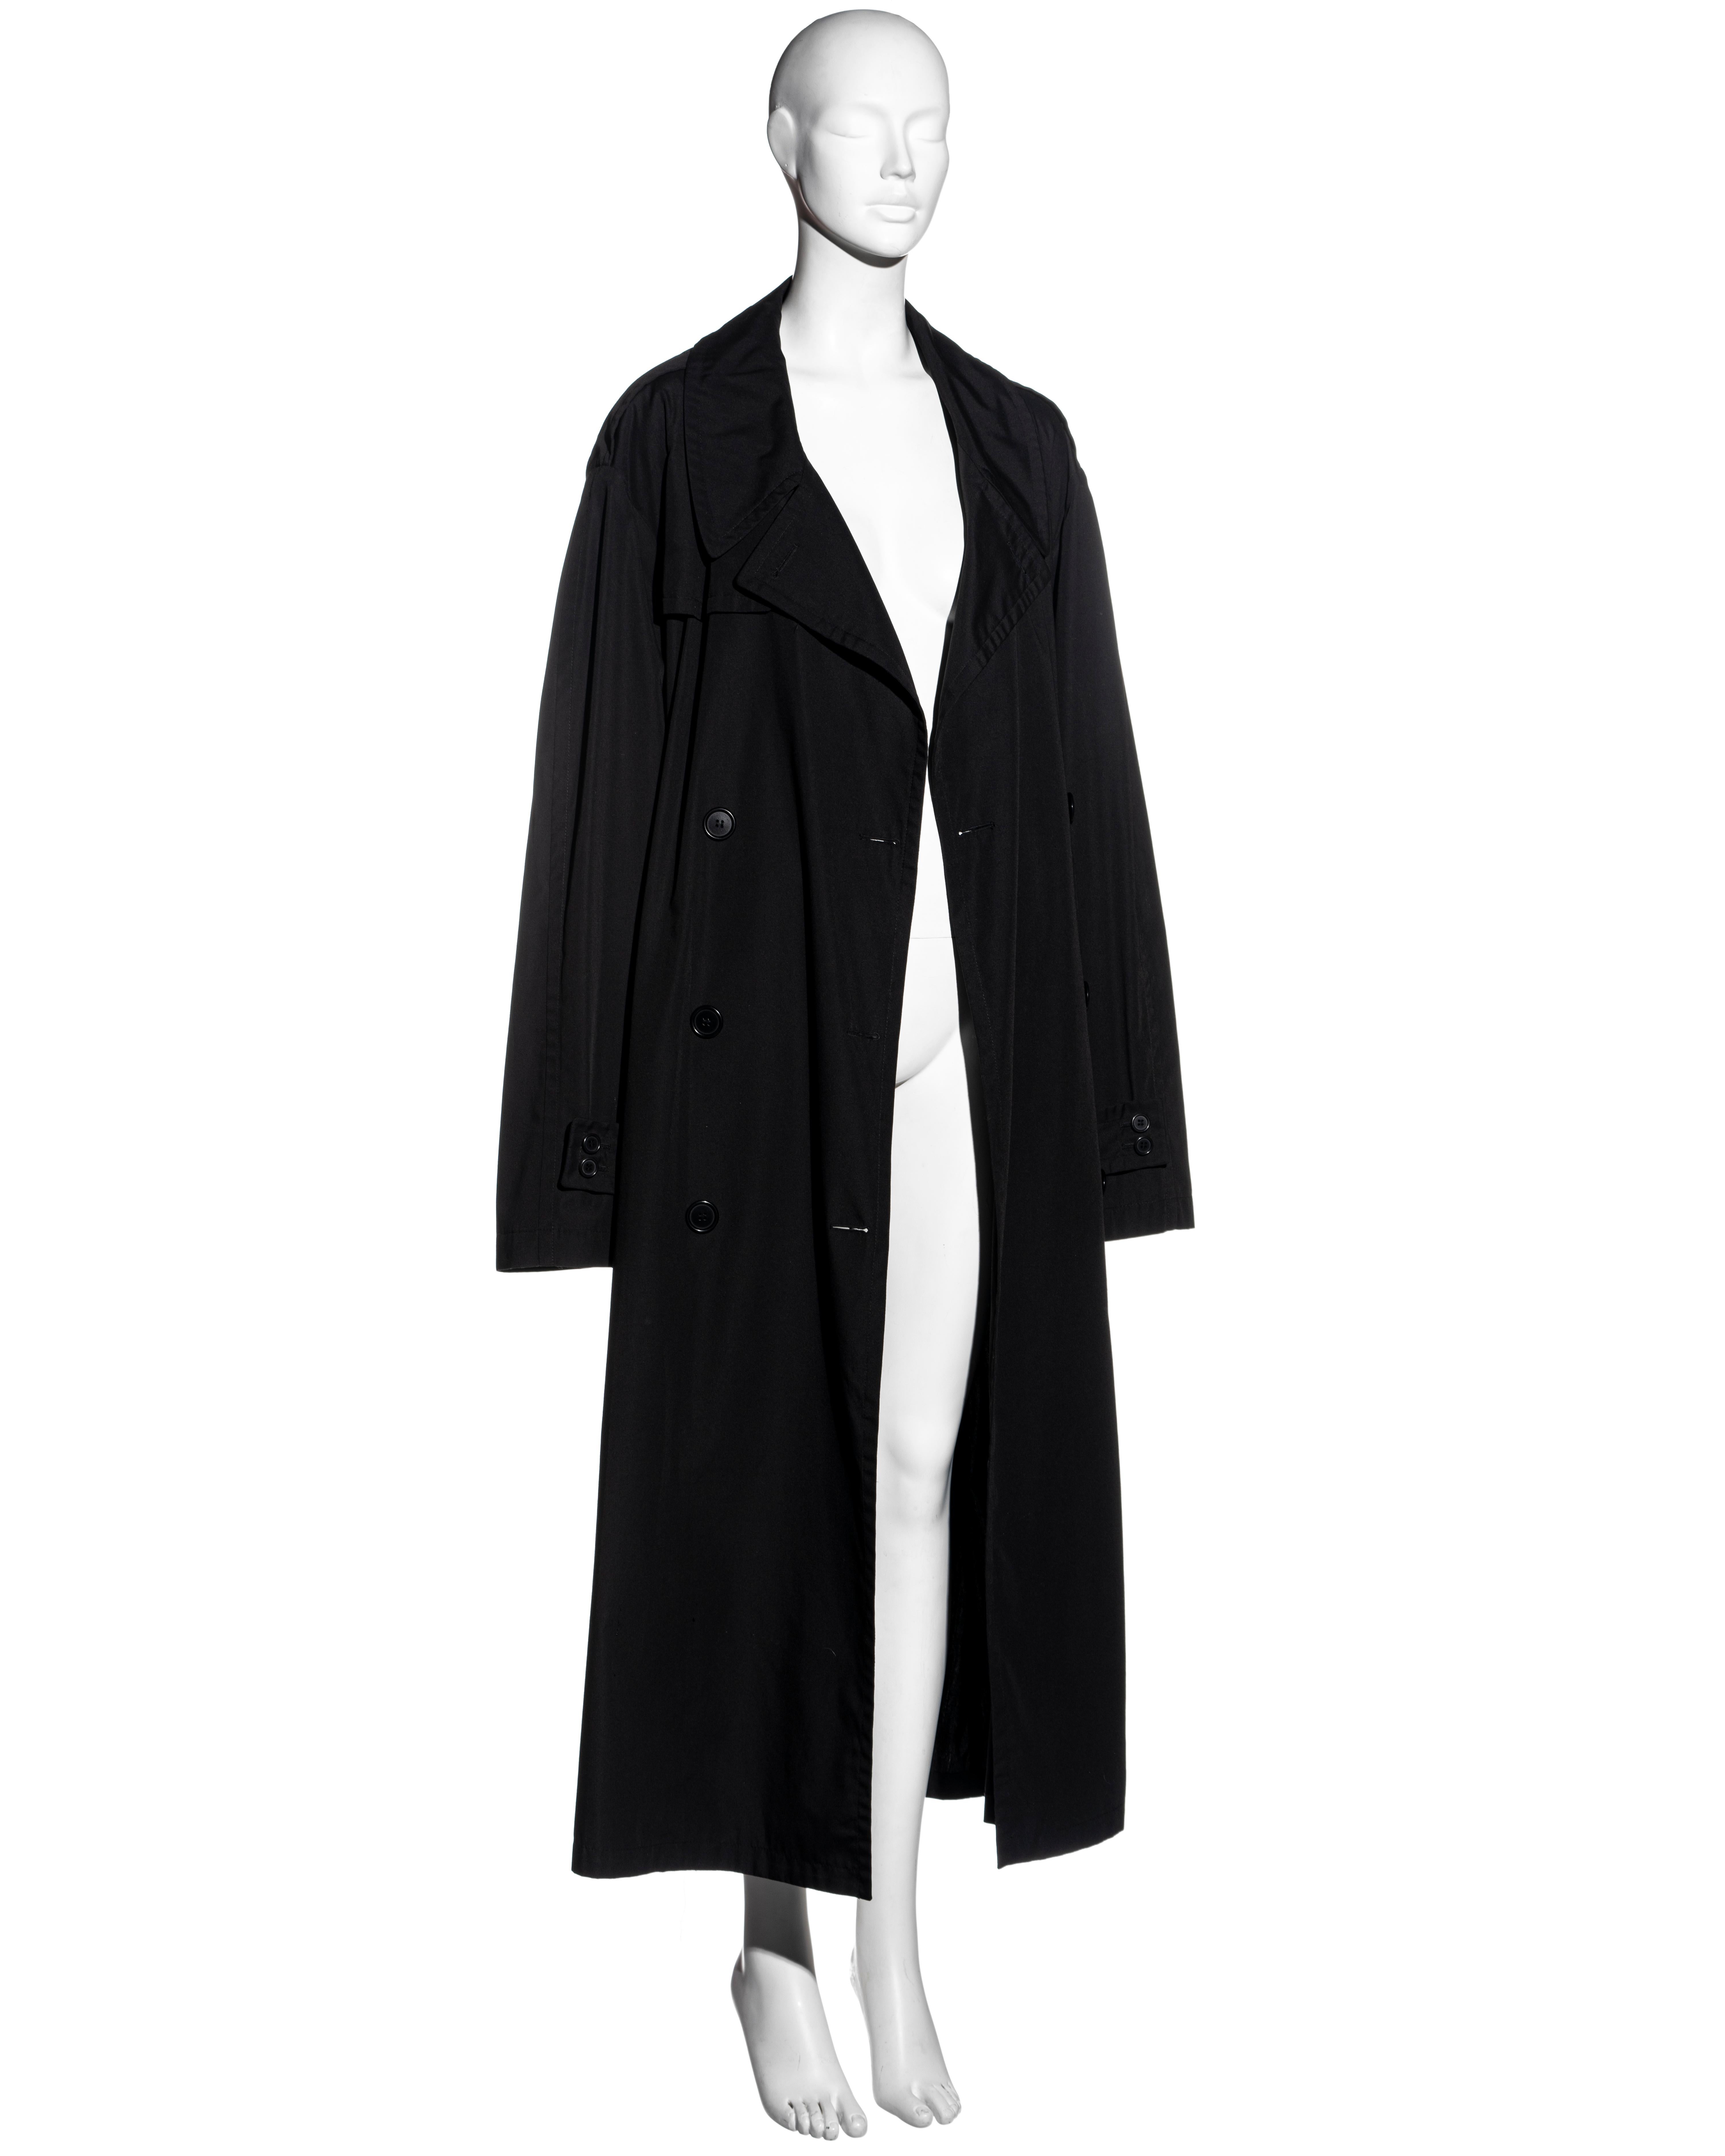 Martin Margiela black oversized size 74 trench coat, ss 2000 For Sale 1